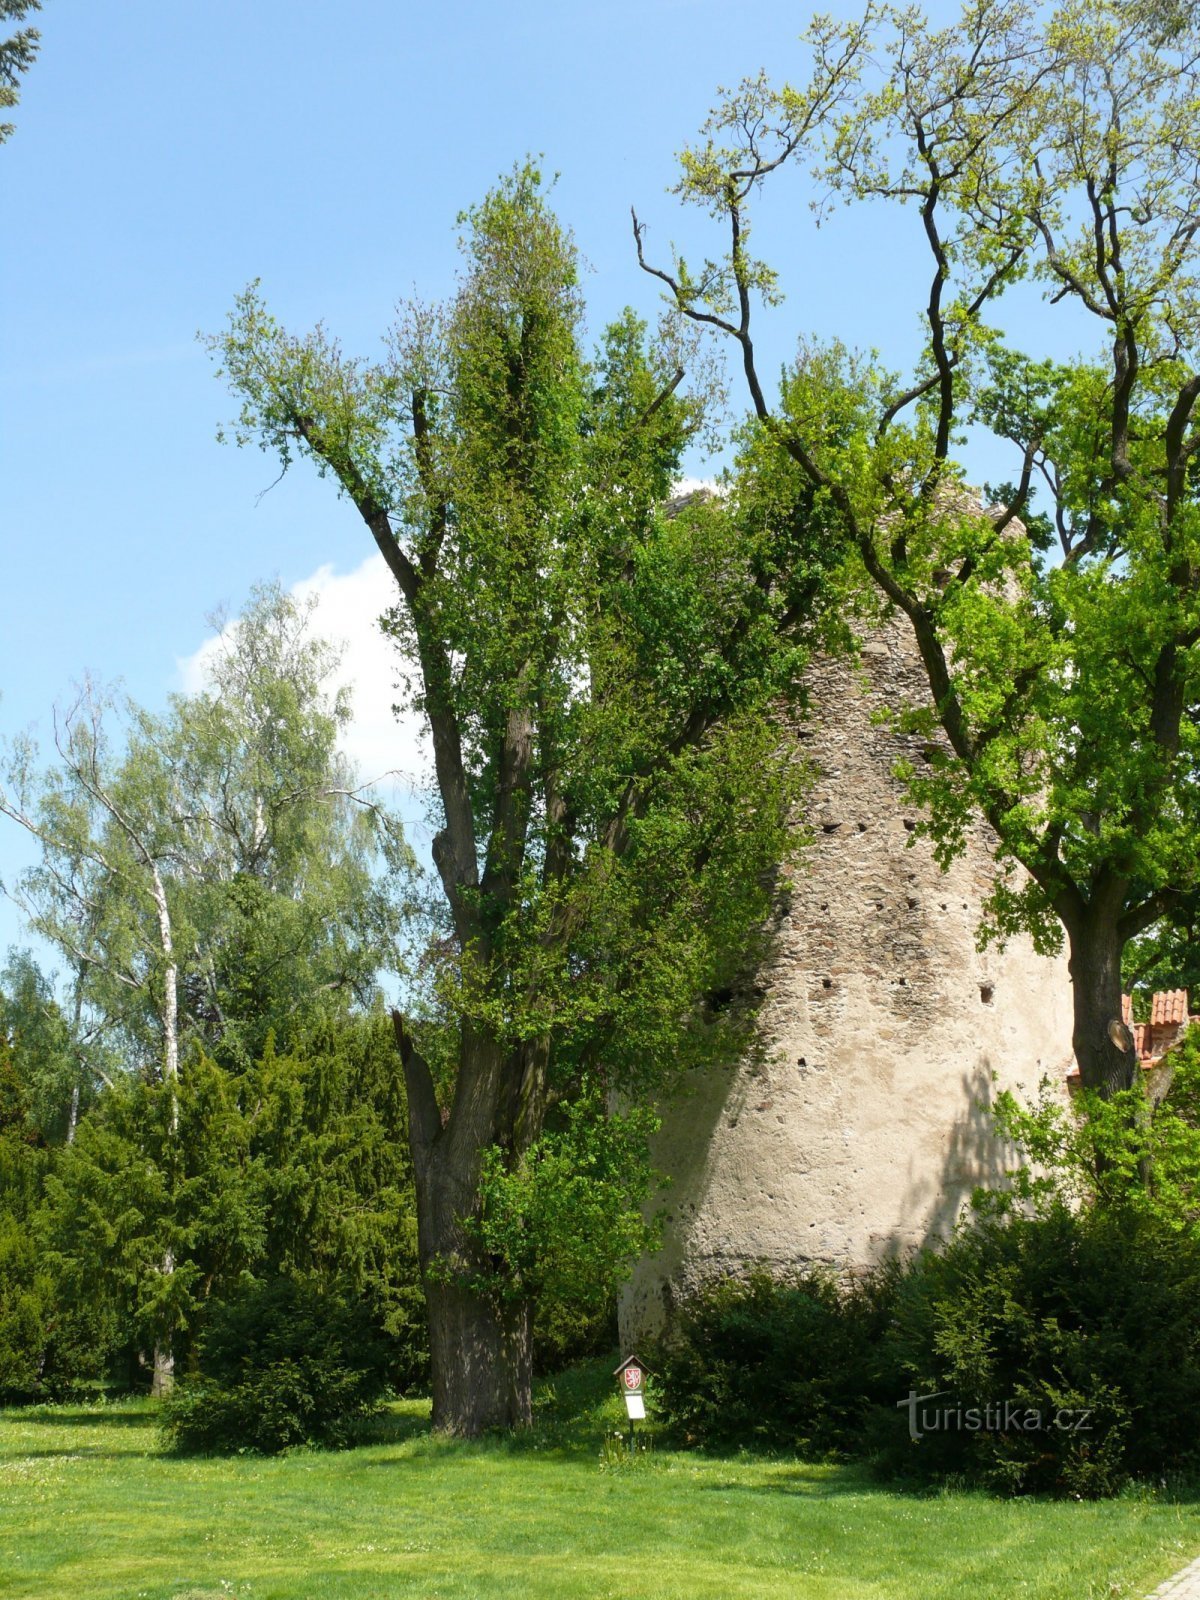 The memorial Kolovrat oak